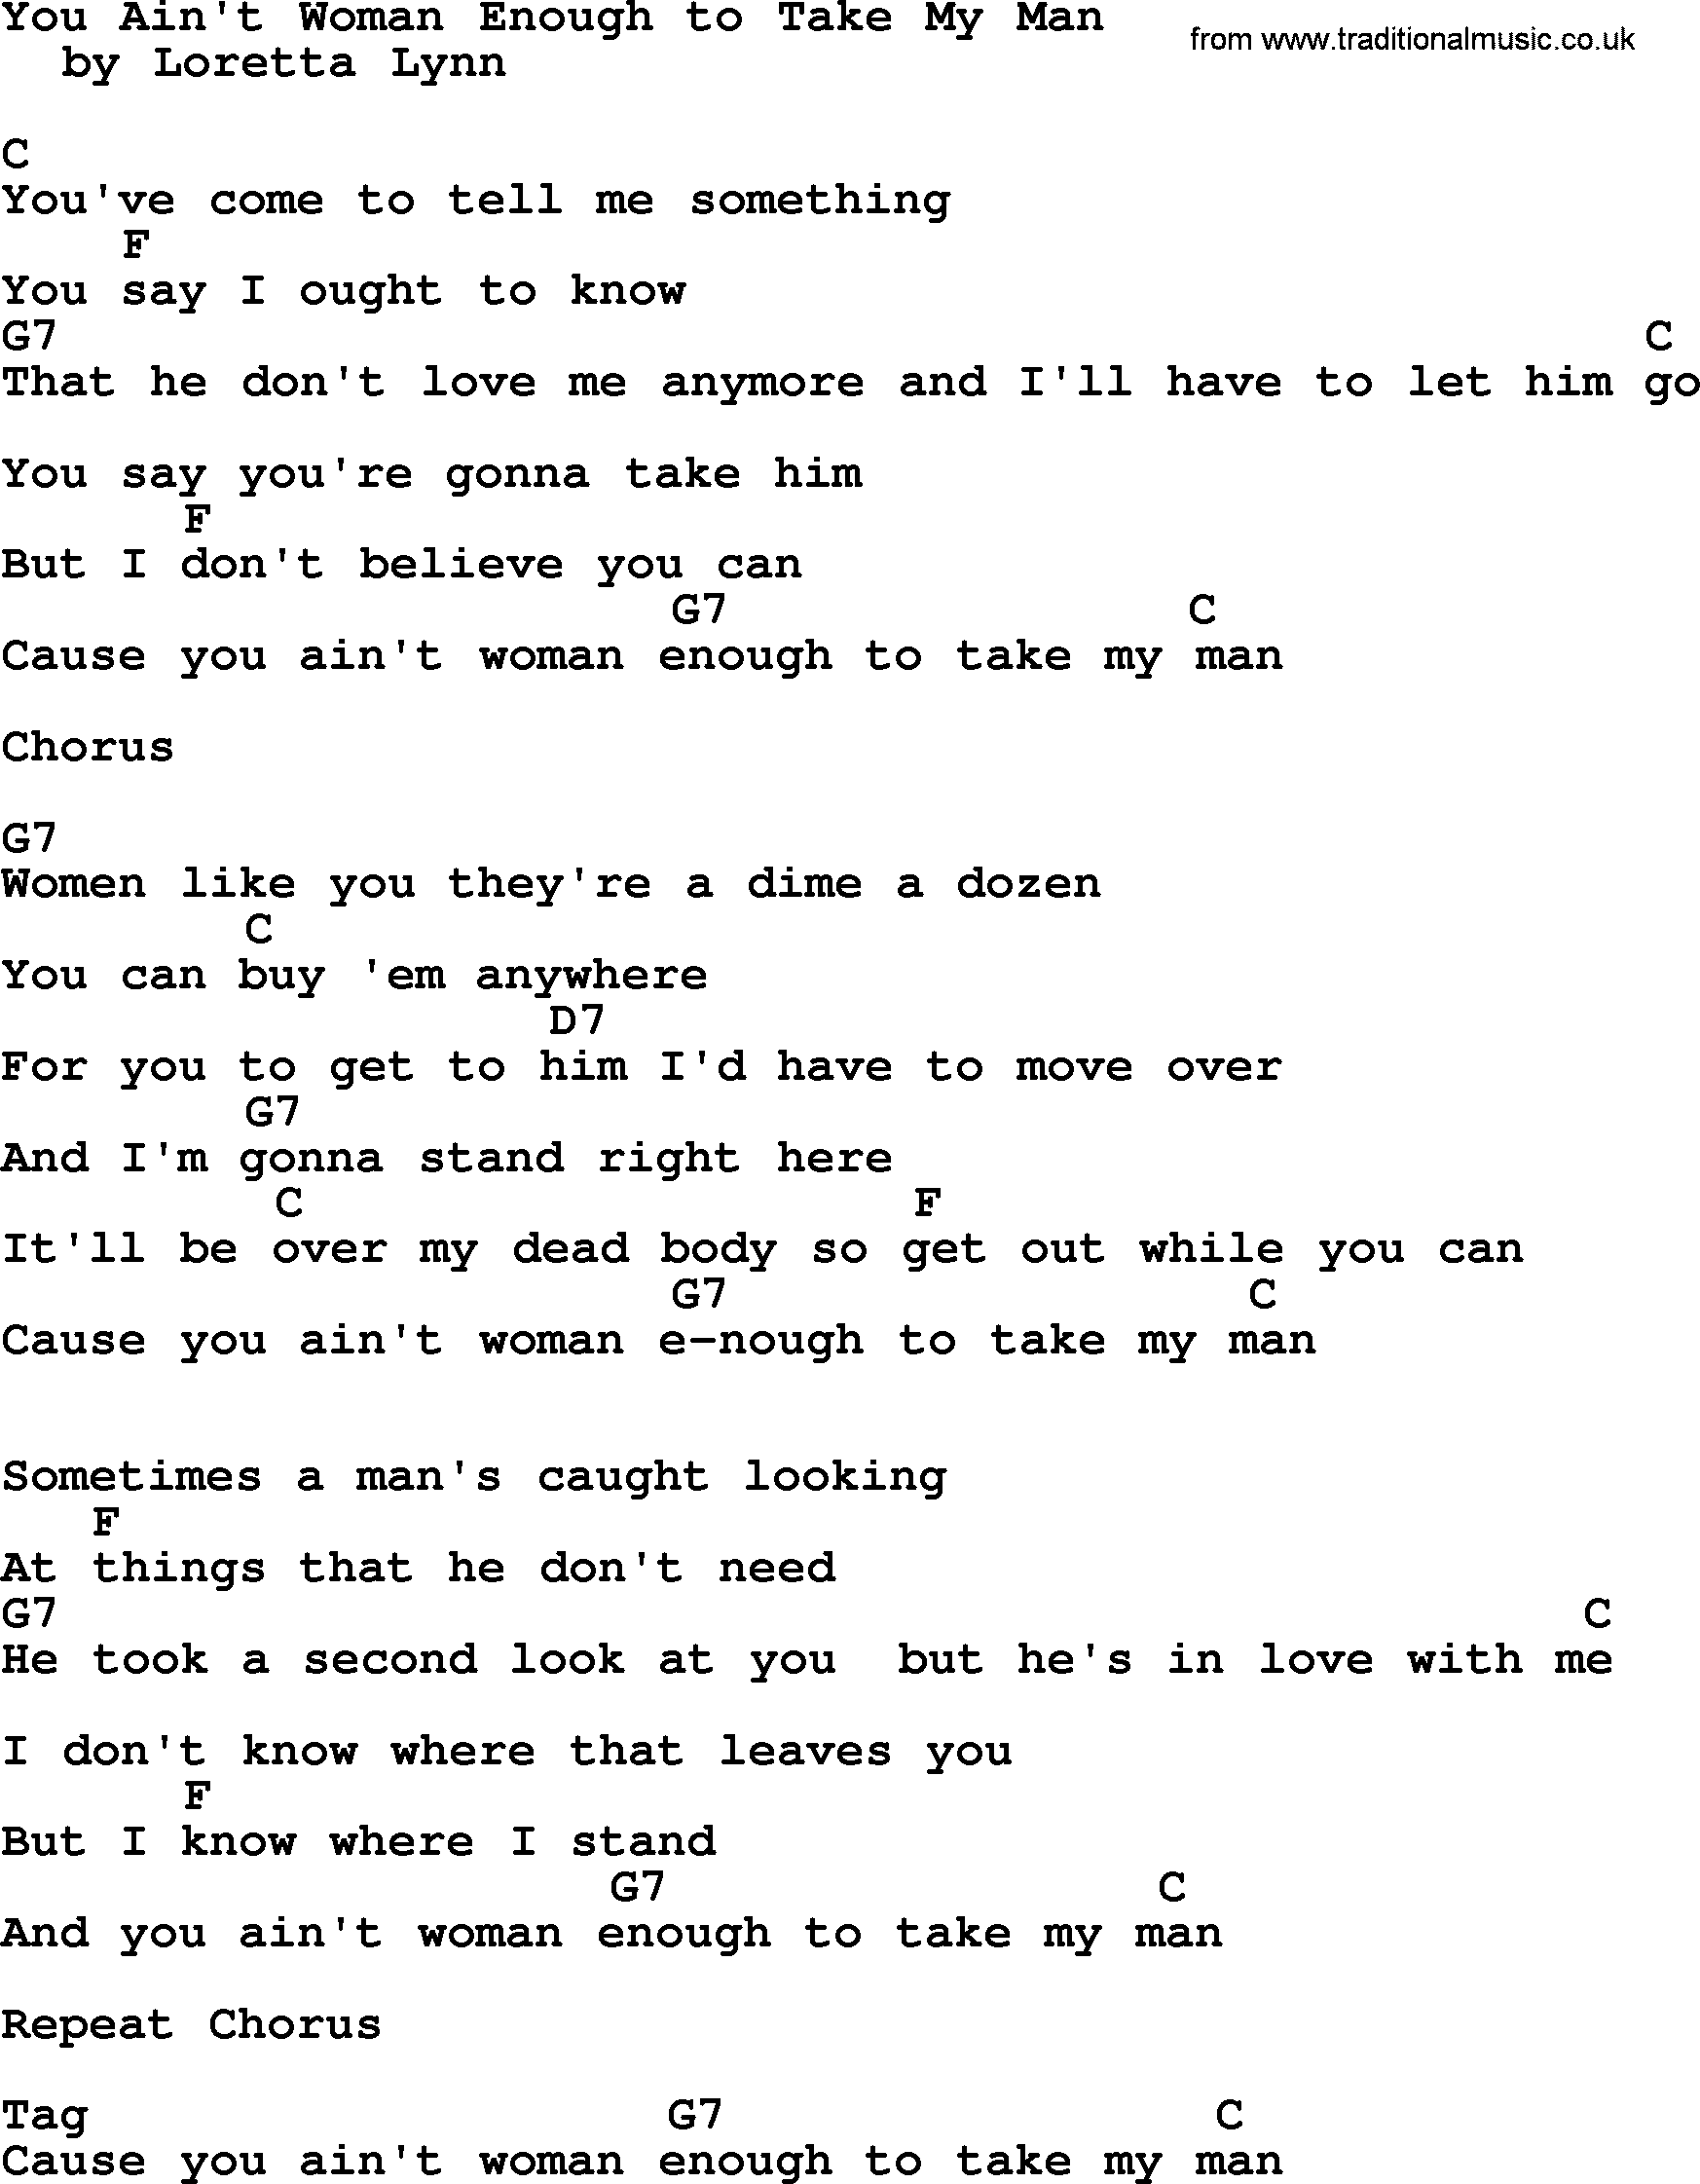 Loretta Lynn song: You Ain't Woman Enough To Take My Man lyrics and chords